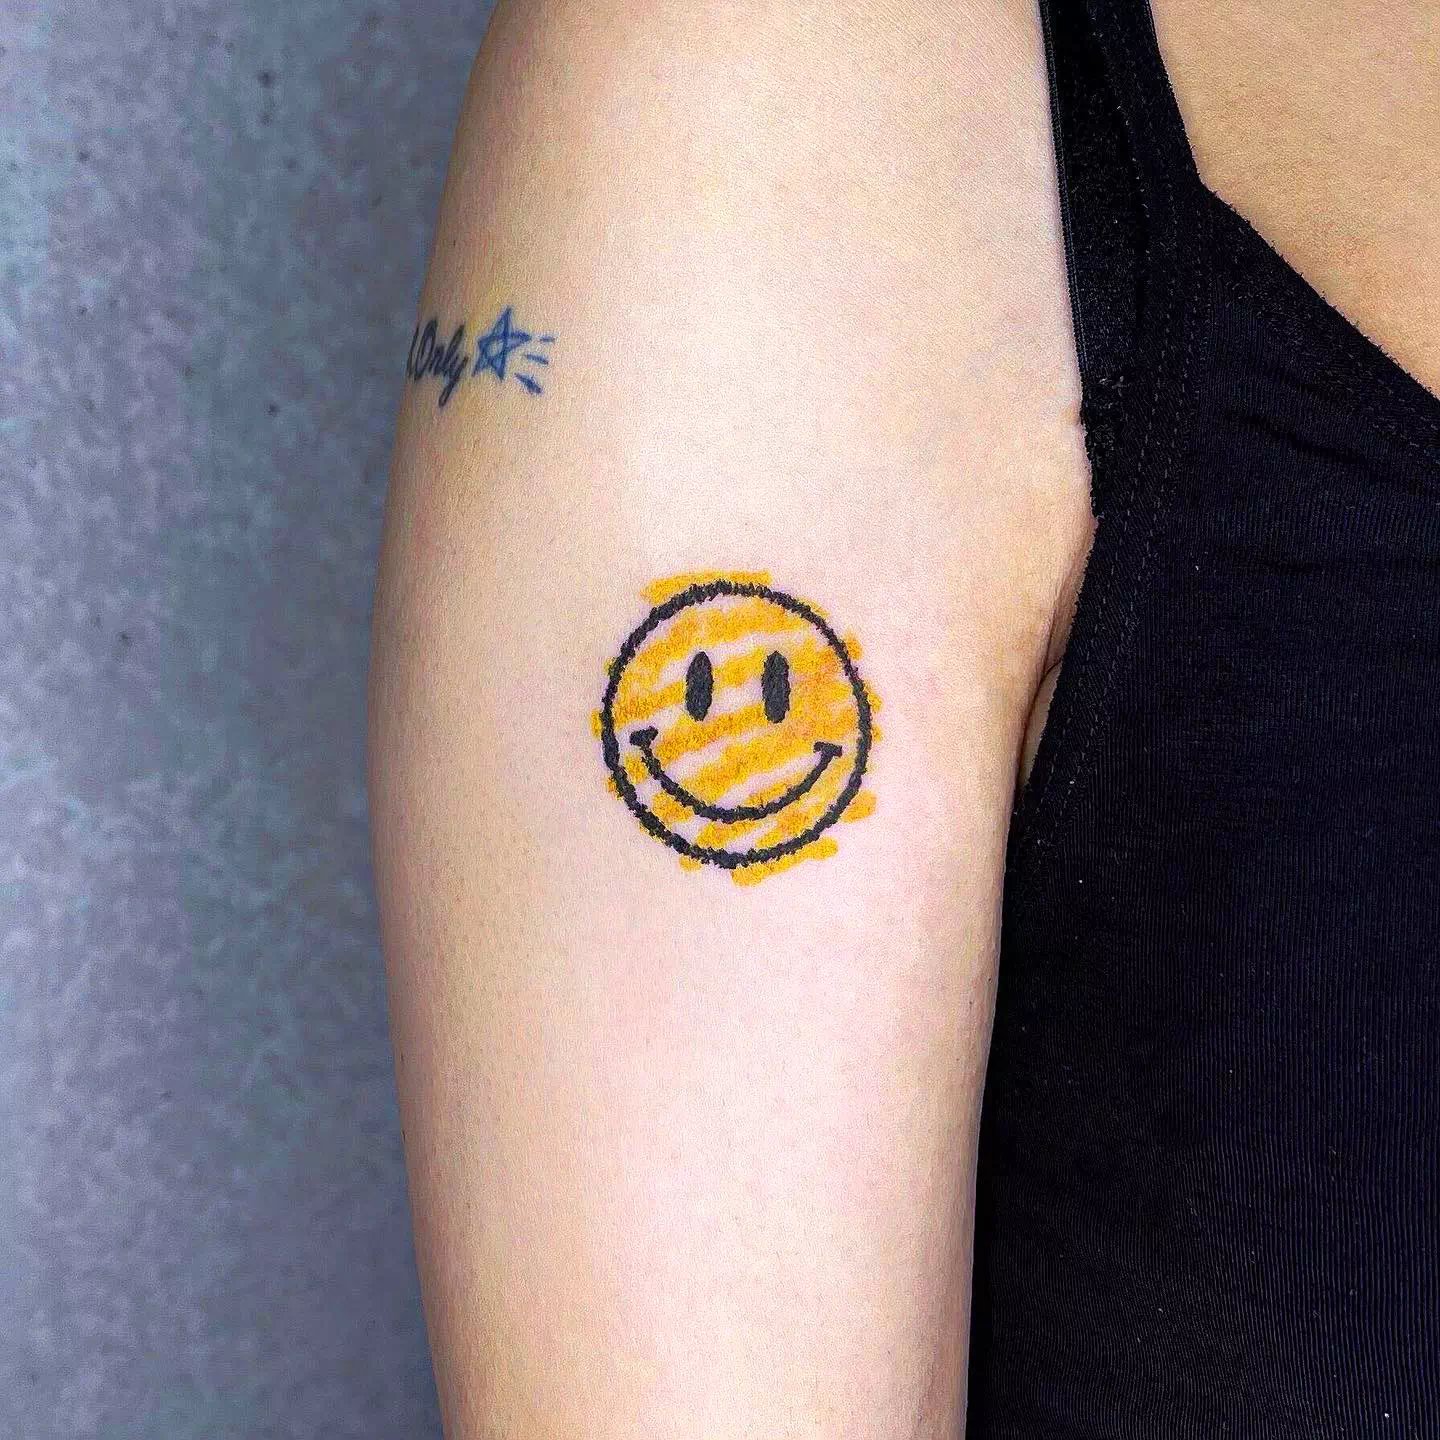 Tatuaje de una sonrisa optimista amarilla